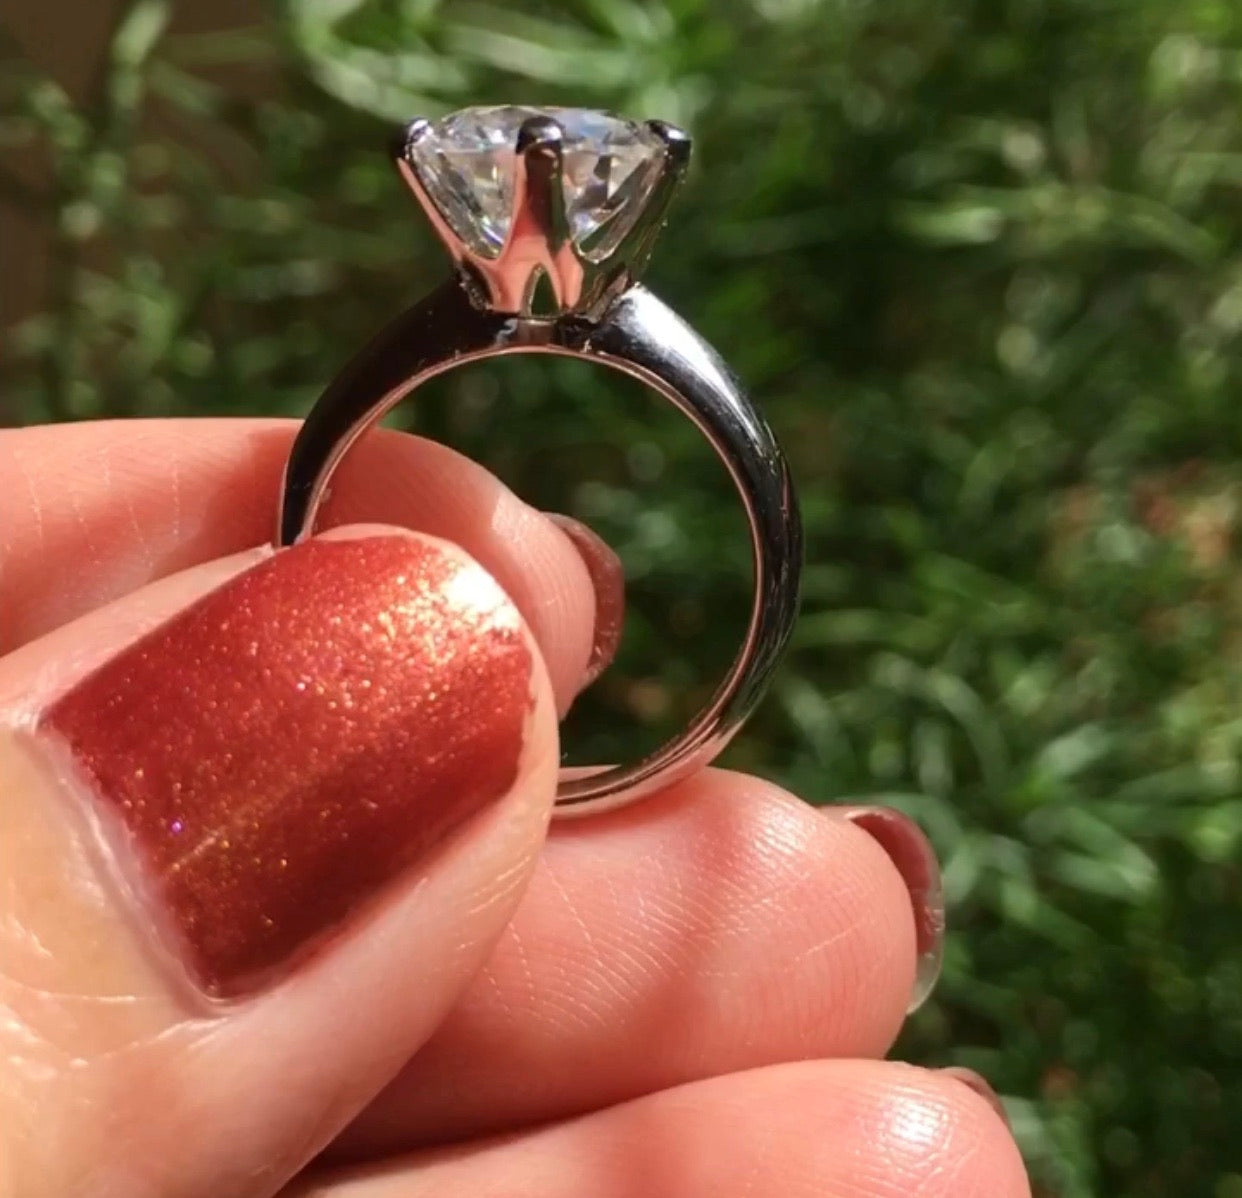 Fiona Moissanite Diamond Ring